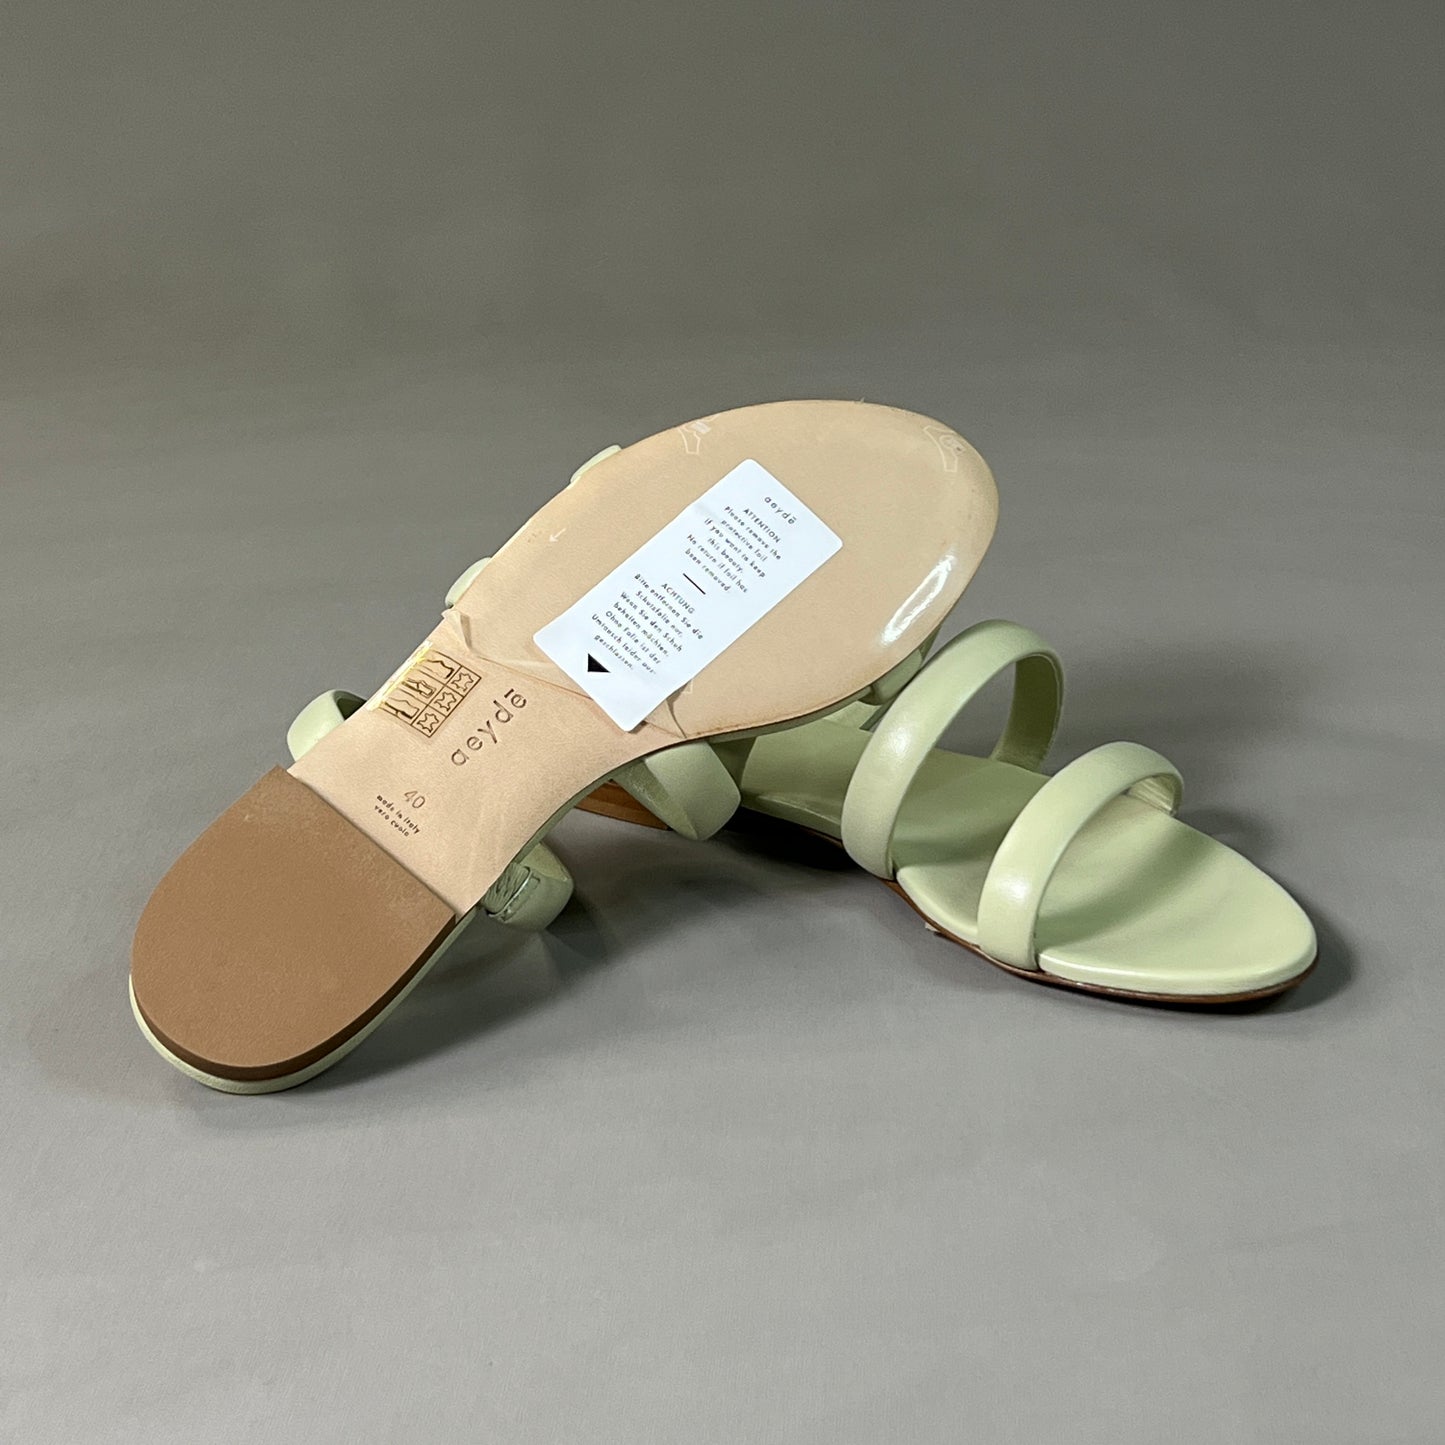 AEYDE Chrissy Pistachio Nappa Leather Sandals Women's Sz 11, EU 41, UK 8 Green (New)